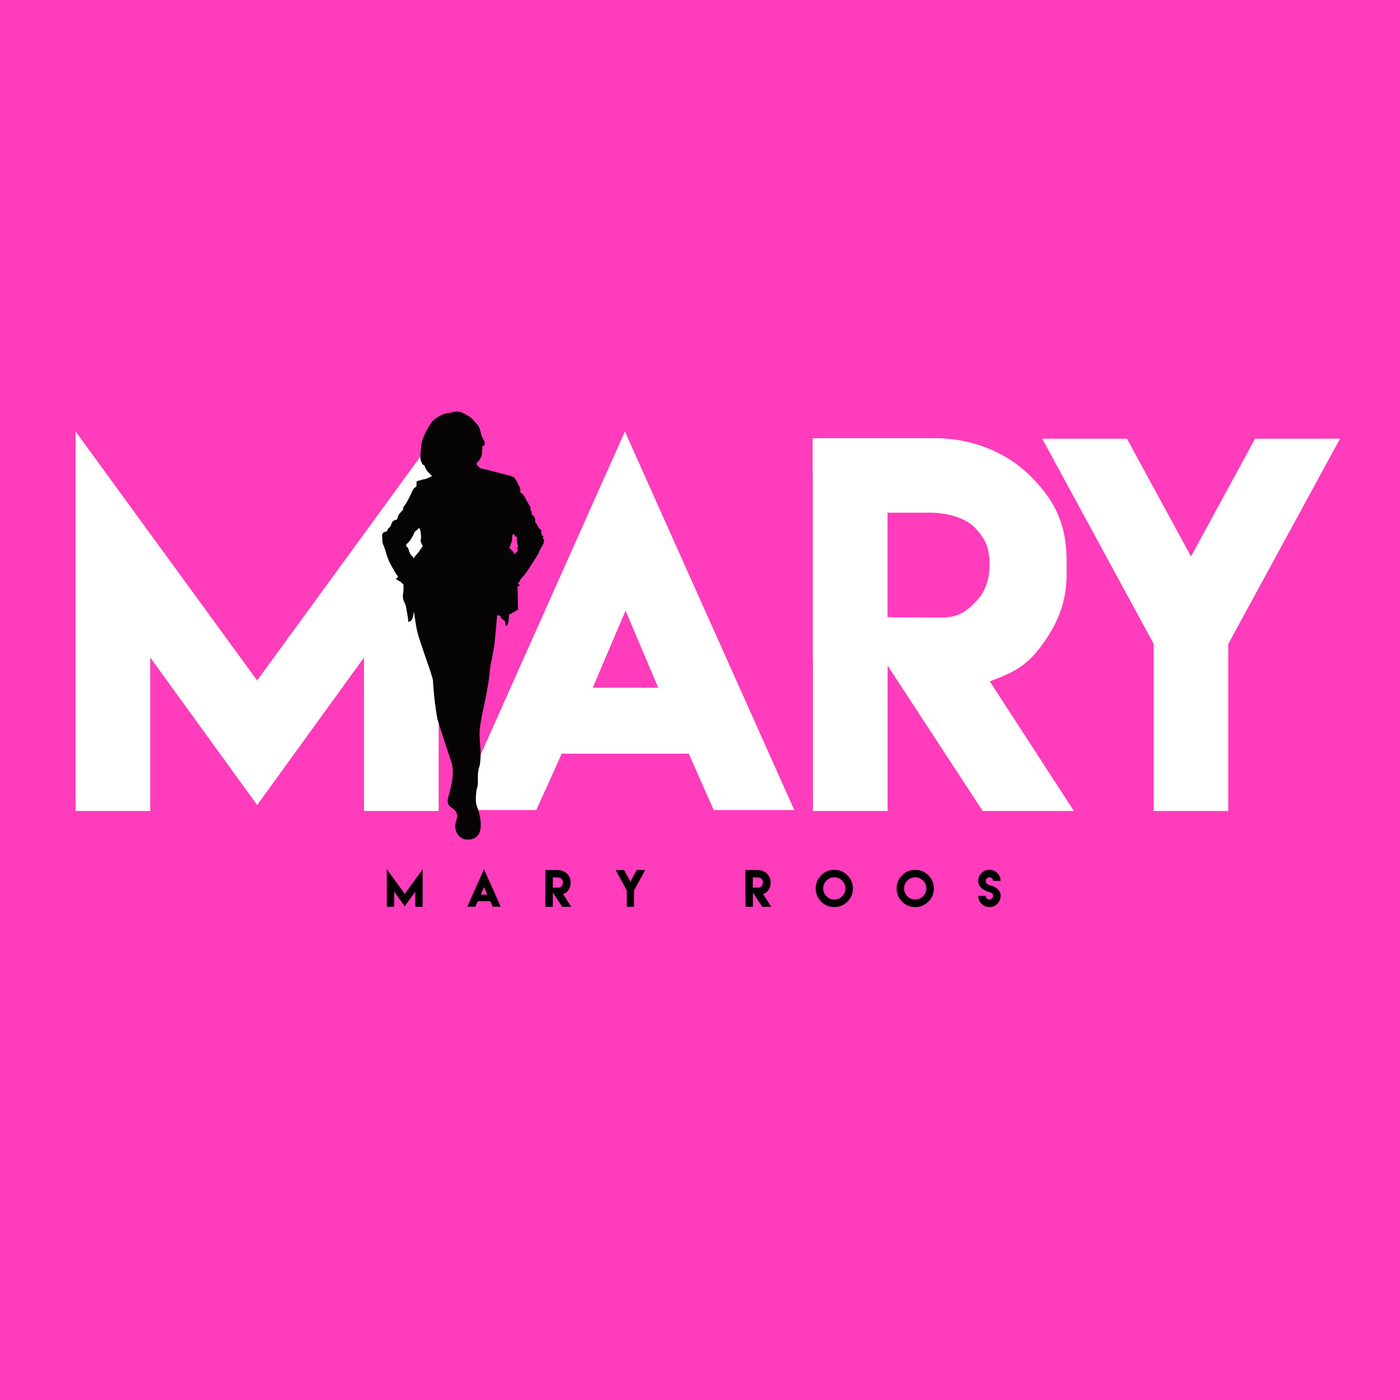 Hape Kerkeling／Mary Roos